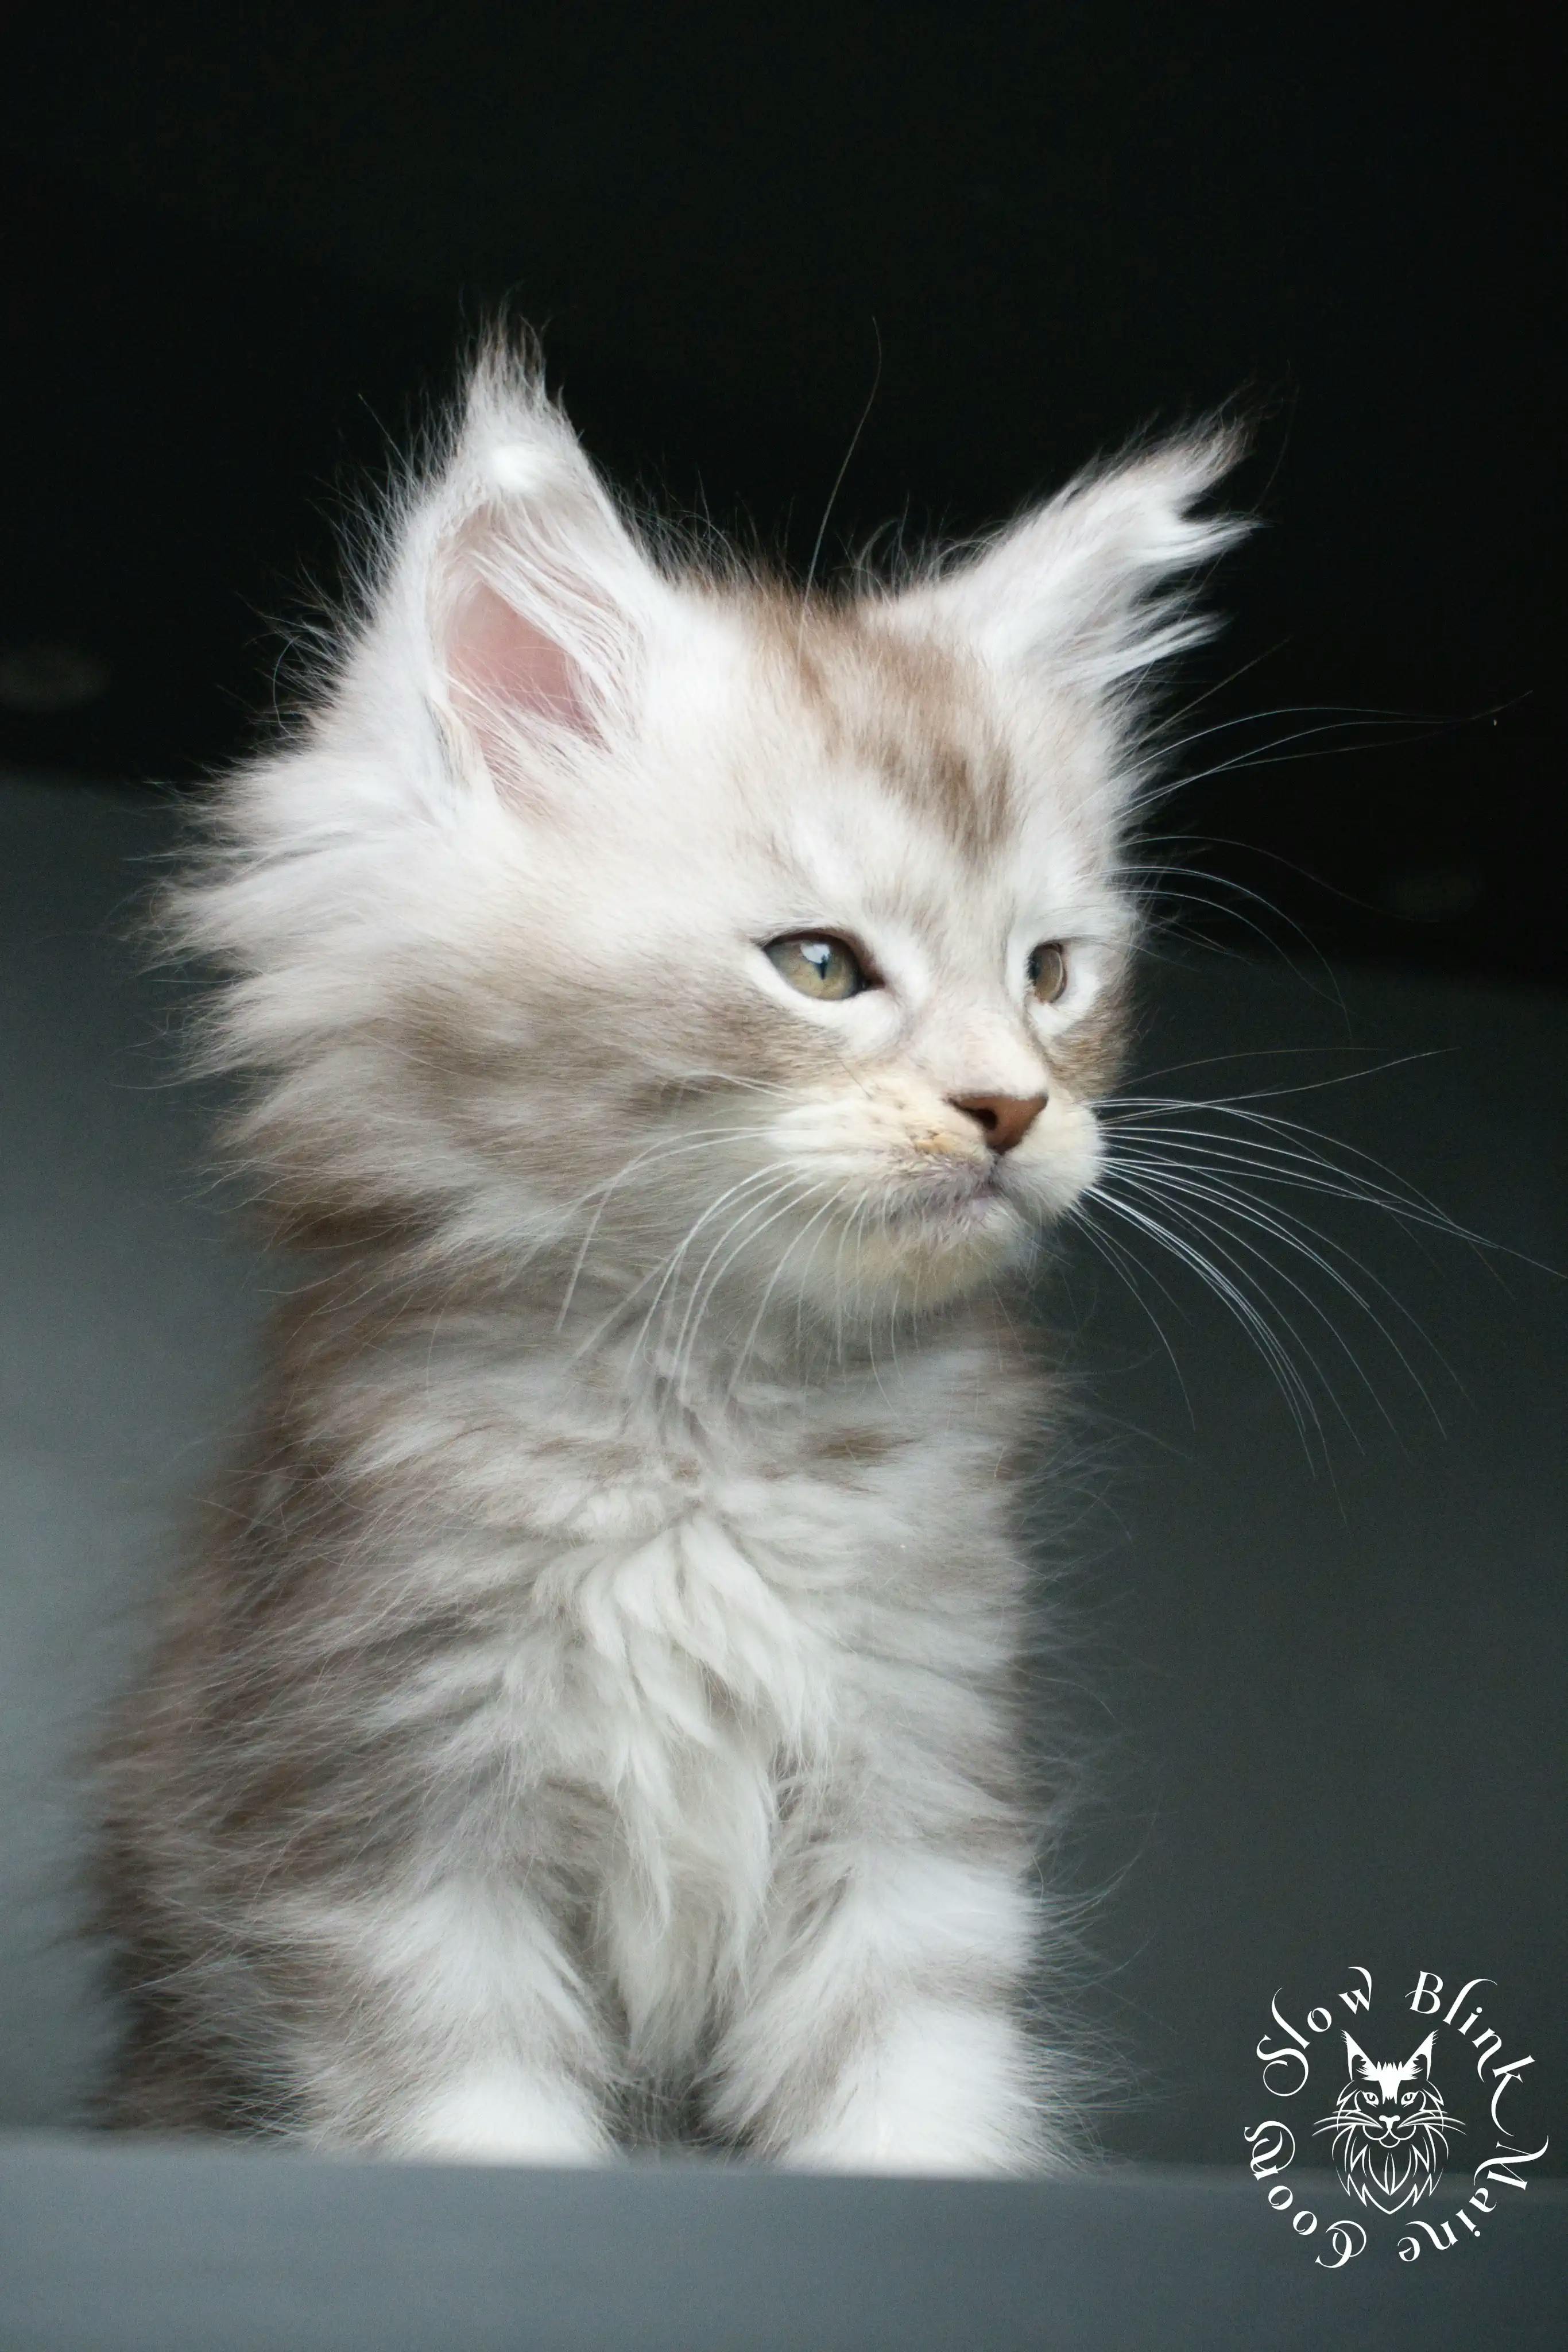 Black Silver Tabby Maine Coon Kittens > black silver tabby maine coon kitten | ems code ns 22 23 24 25 | slowblinkmainecoons | 408